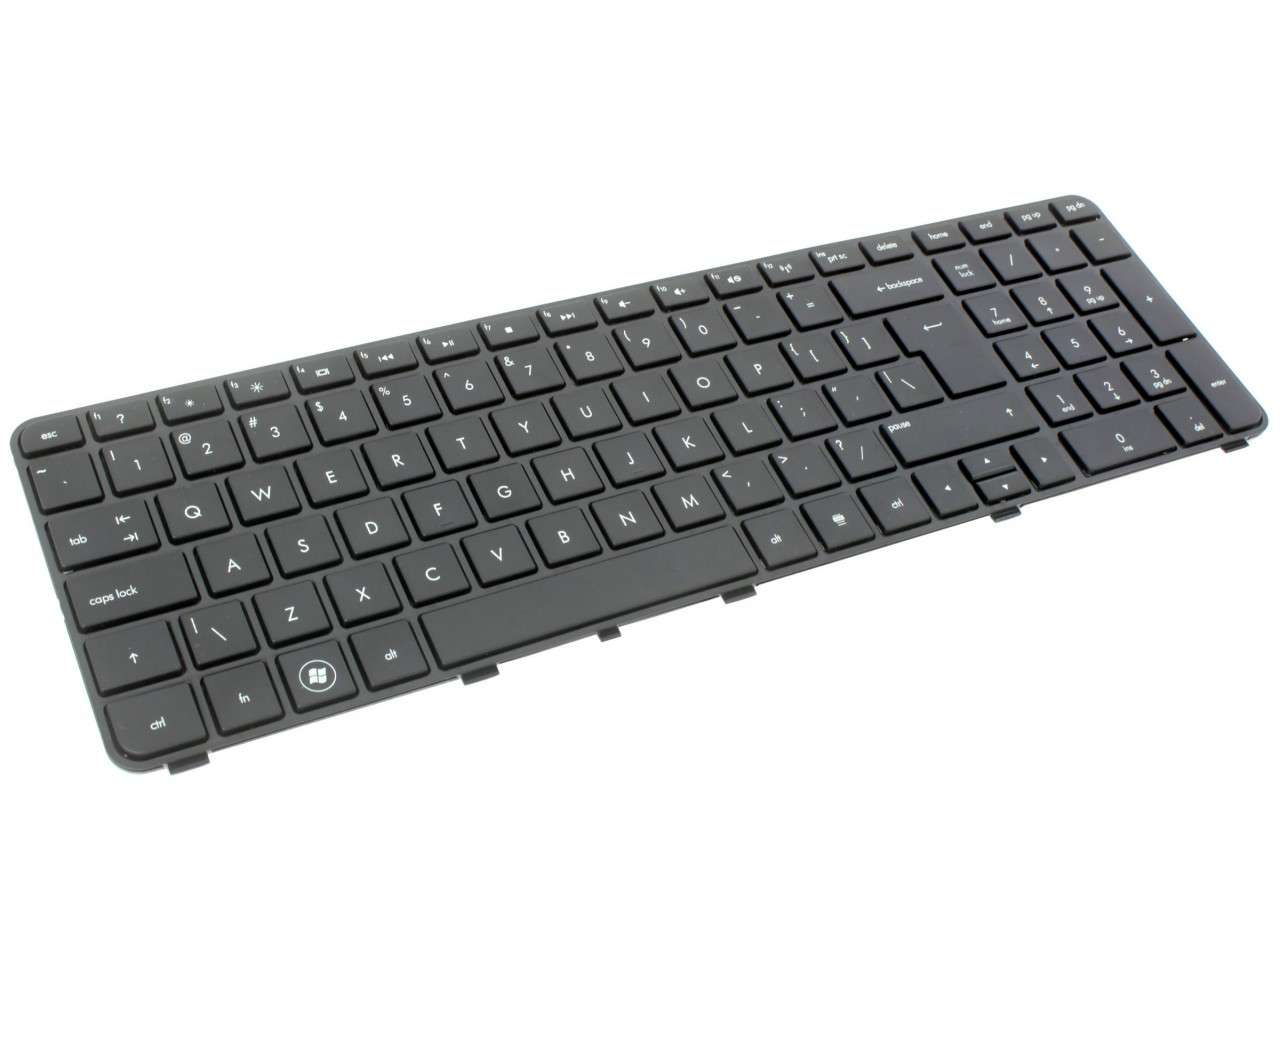 Tastatura HP NSK HS2UQ 0U